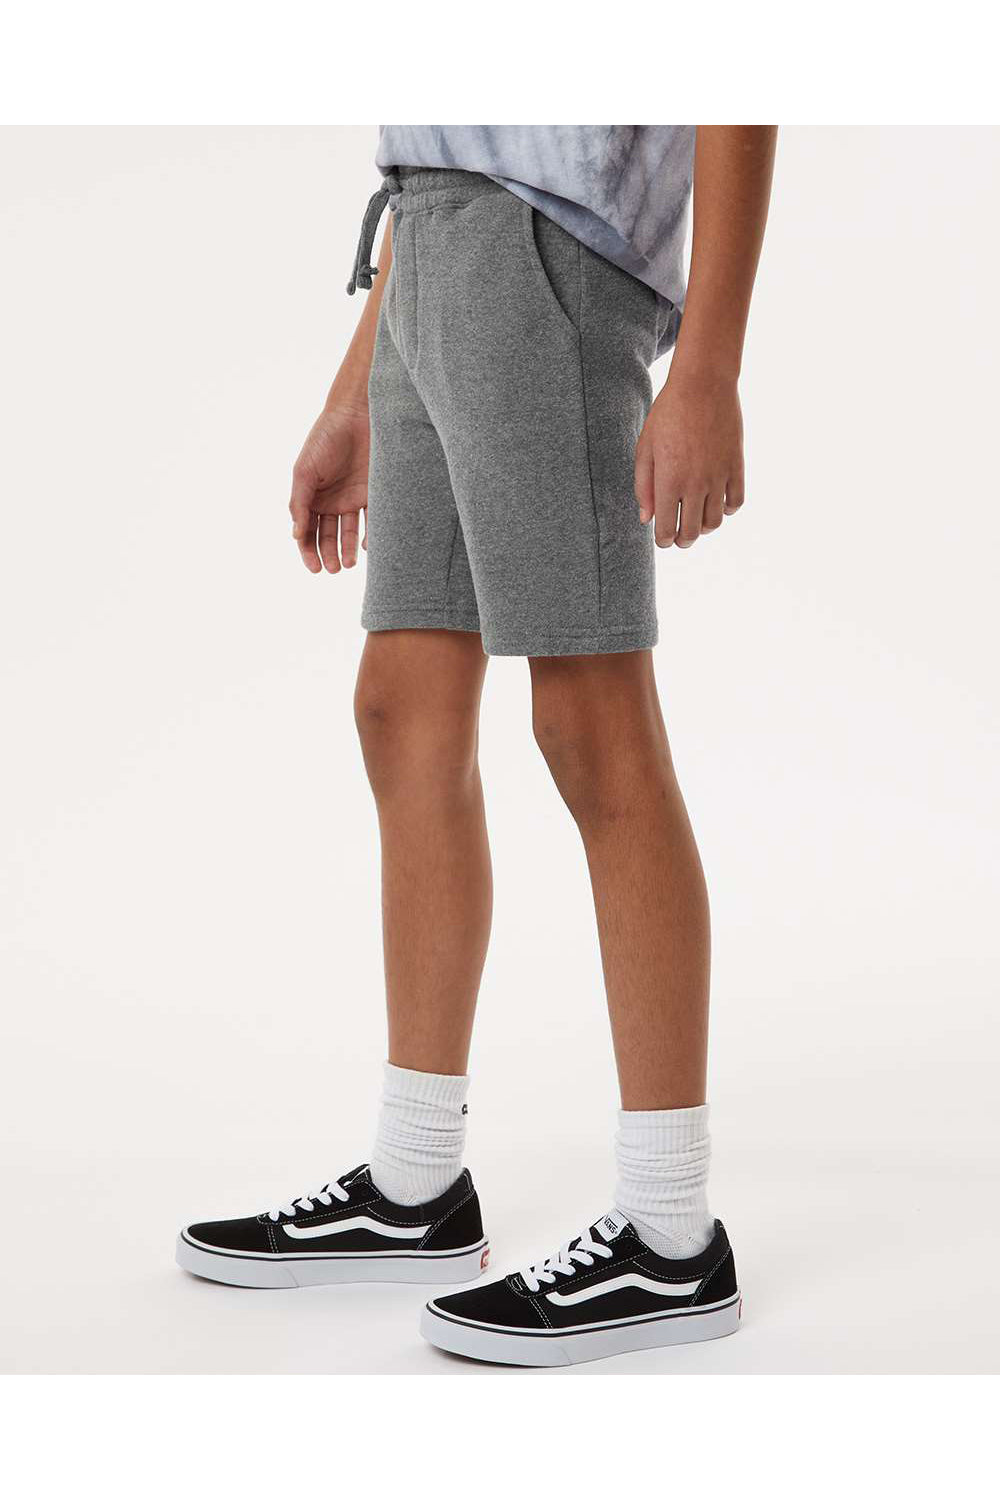 Independent Trading Co. PRM16SRT Youth Special Blend Fleece Shorts w/ Pockets Nickel Grey Model Side